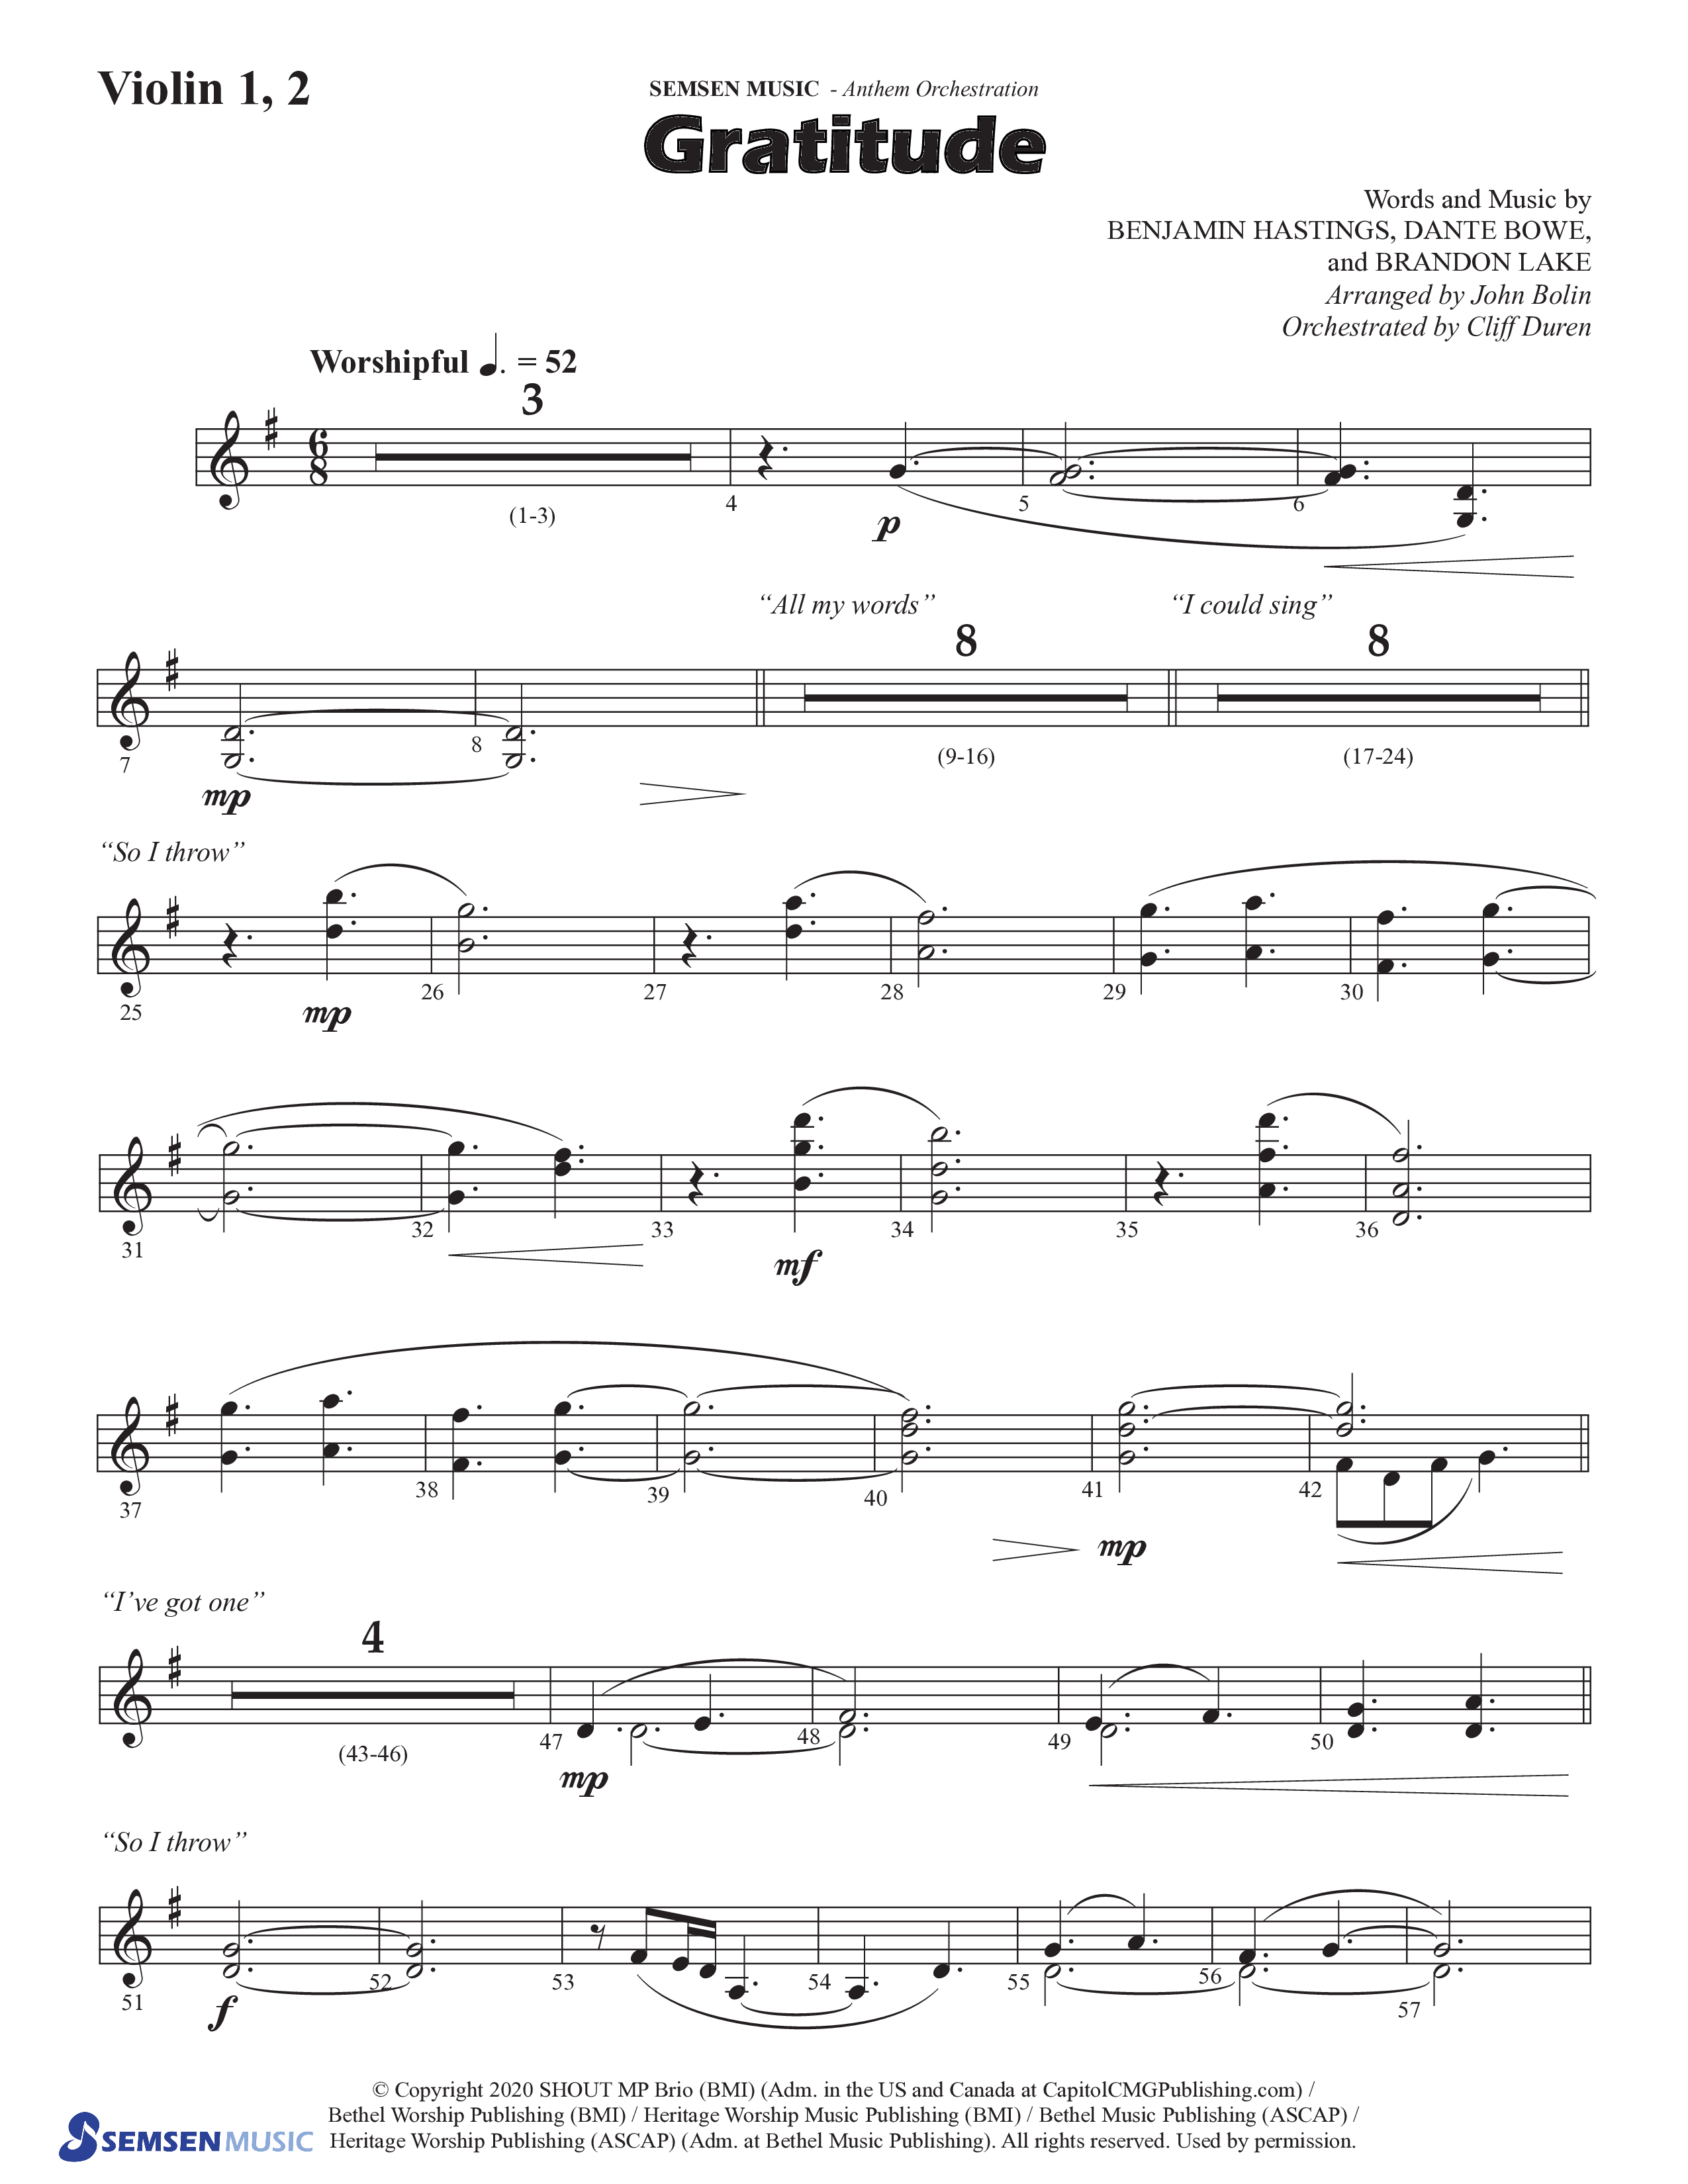 Gratitude (Choral Anthem SATB) Violin 1/2 (Semsen Music / Arr. John Bolin / Orch. Cliff Duren)